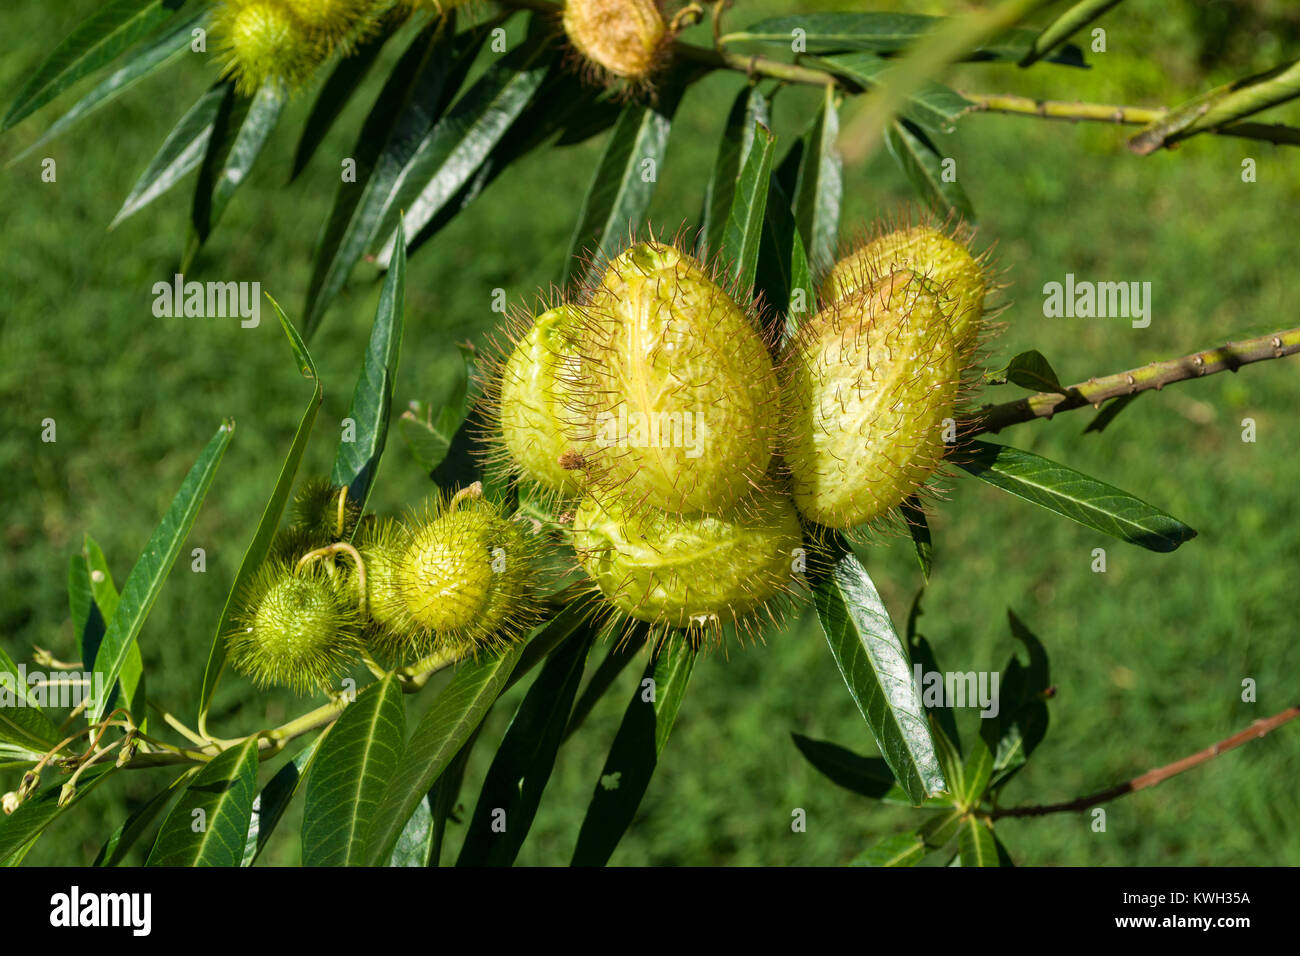 Balloon plant (Gomphocarpus physocarpus or Asclepias physocarpus) seed pods, Nairobi, Kenya, East Africa Stock Photo